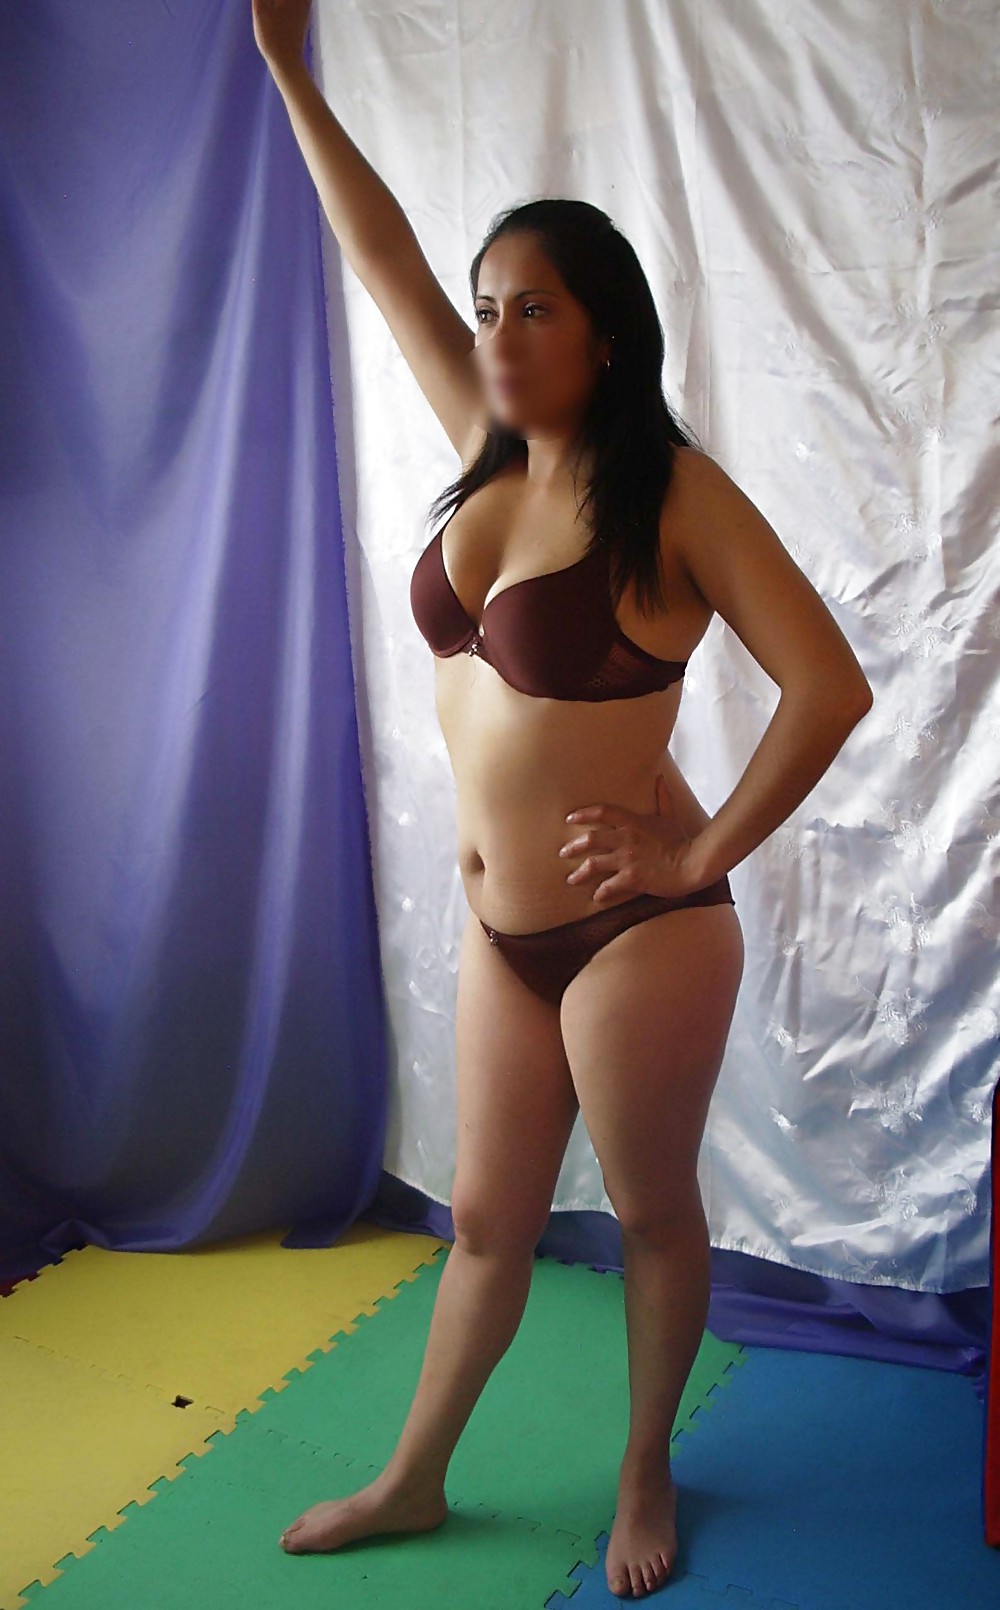 Amateur latina models her bra and panty #24599289